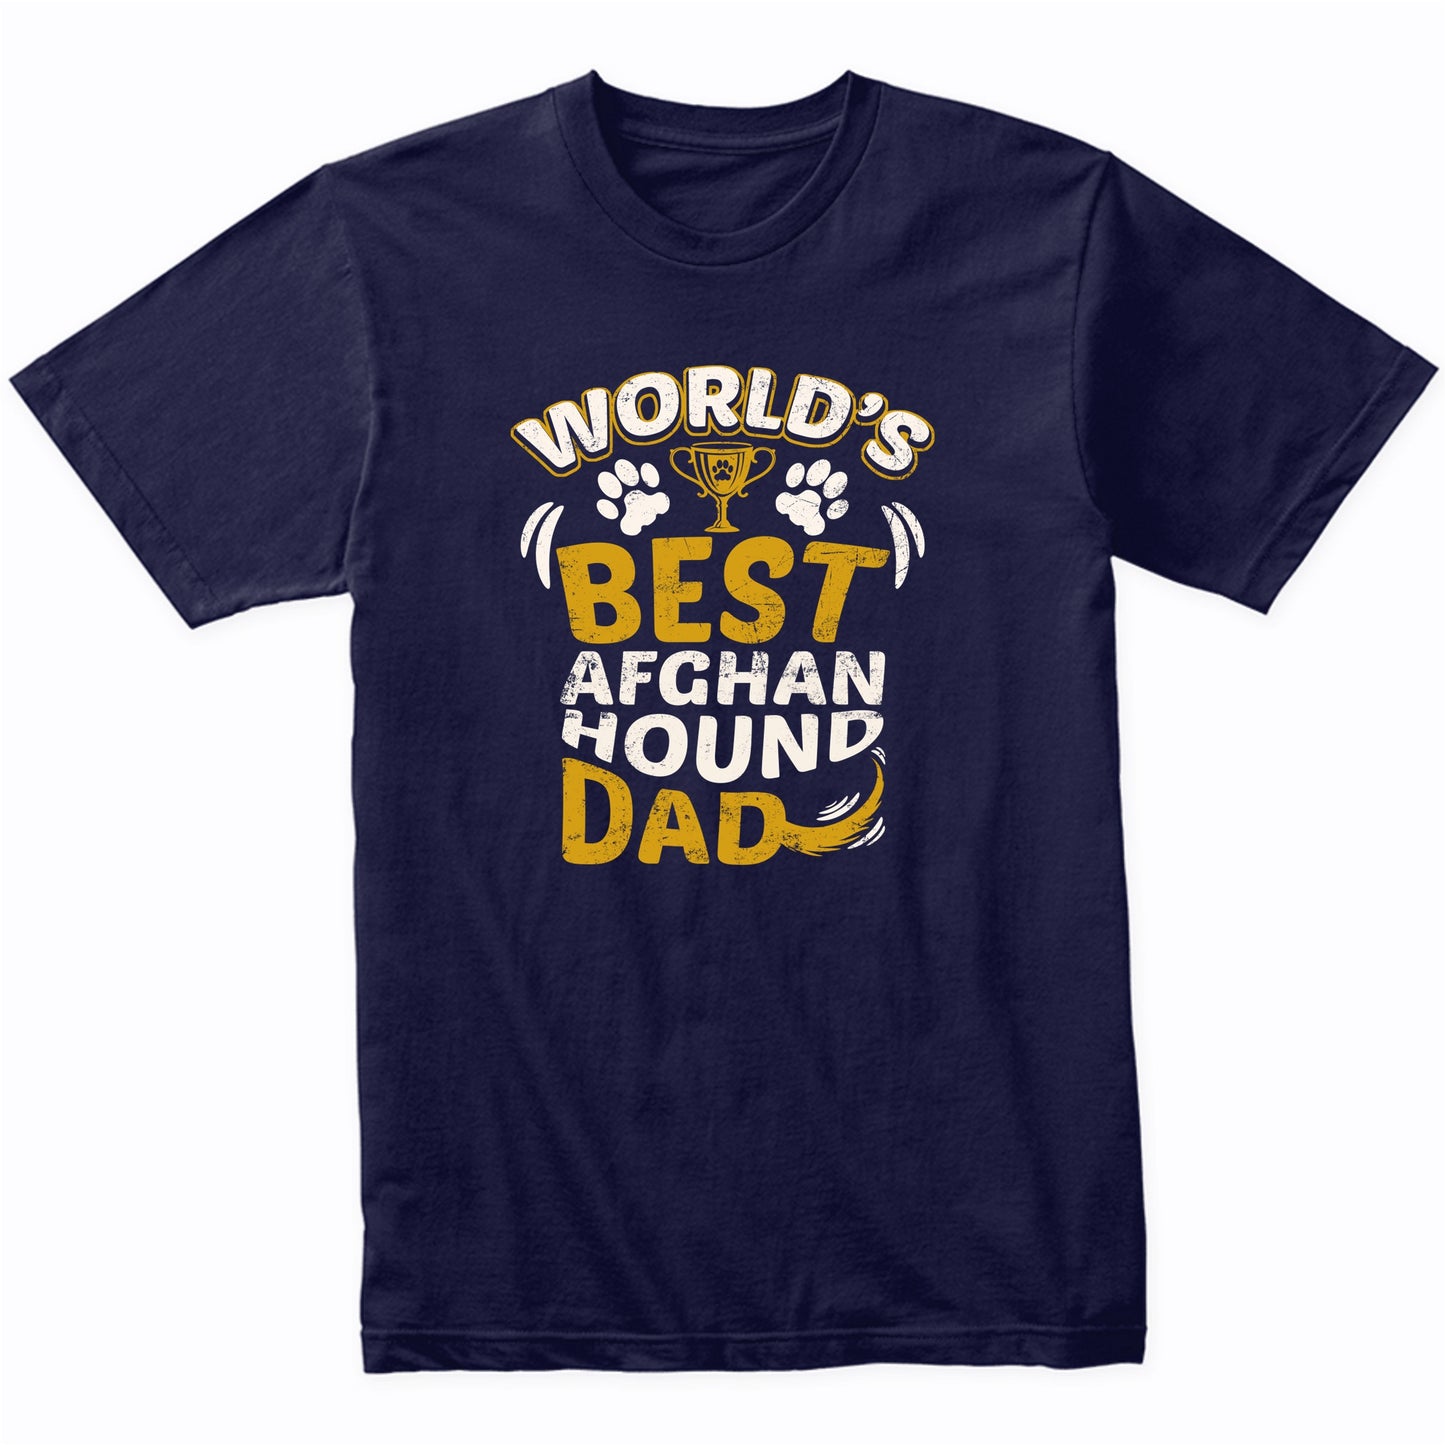 World's Best Afghan Hound Dad Graphic T-Shirt